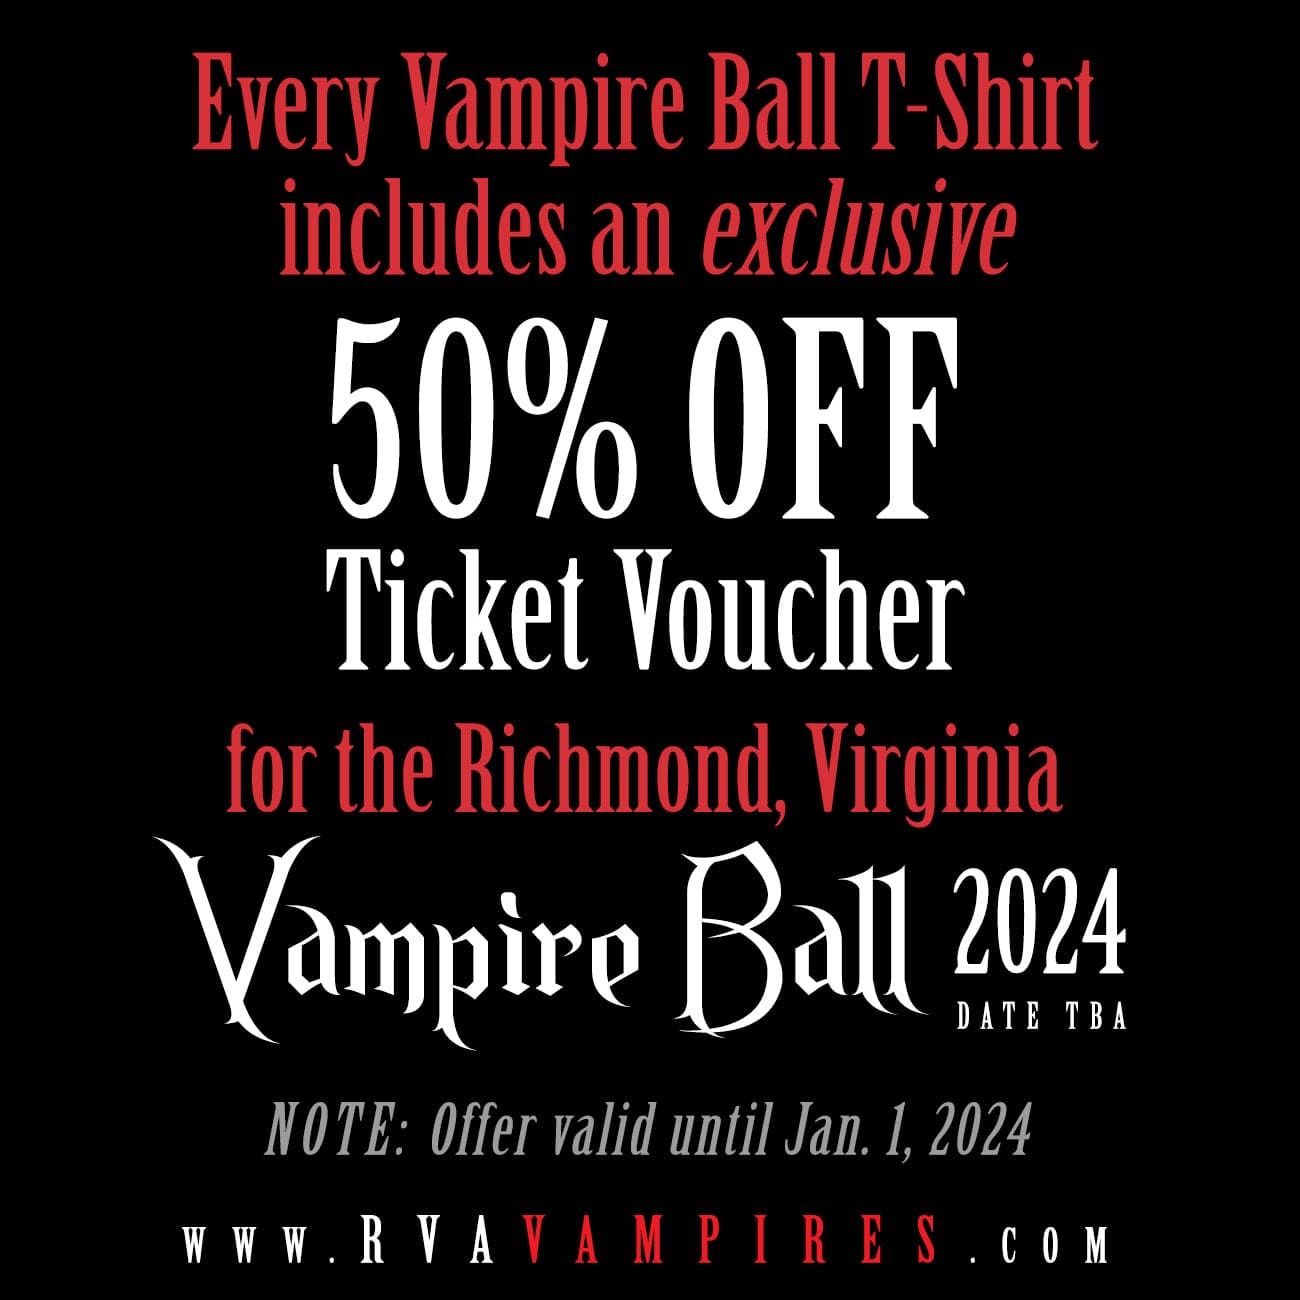 RVA Vampire Ball Logo (Unisex T-Shirt)